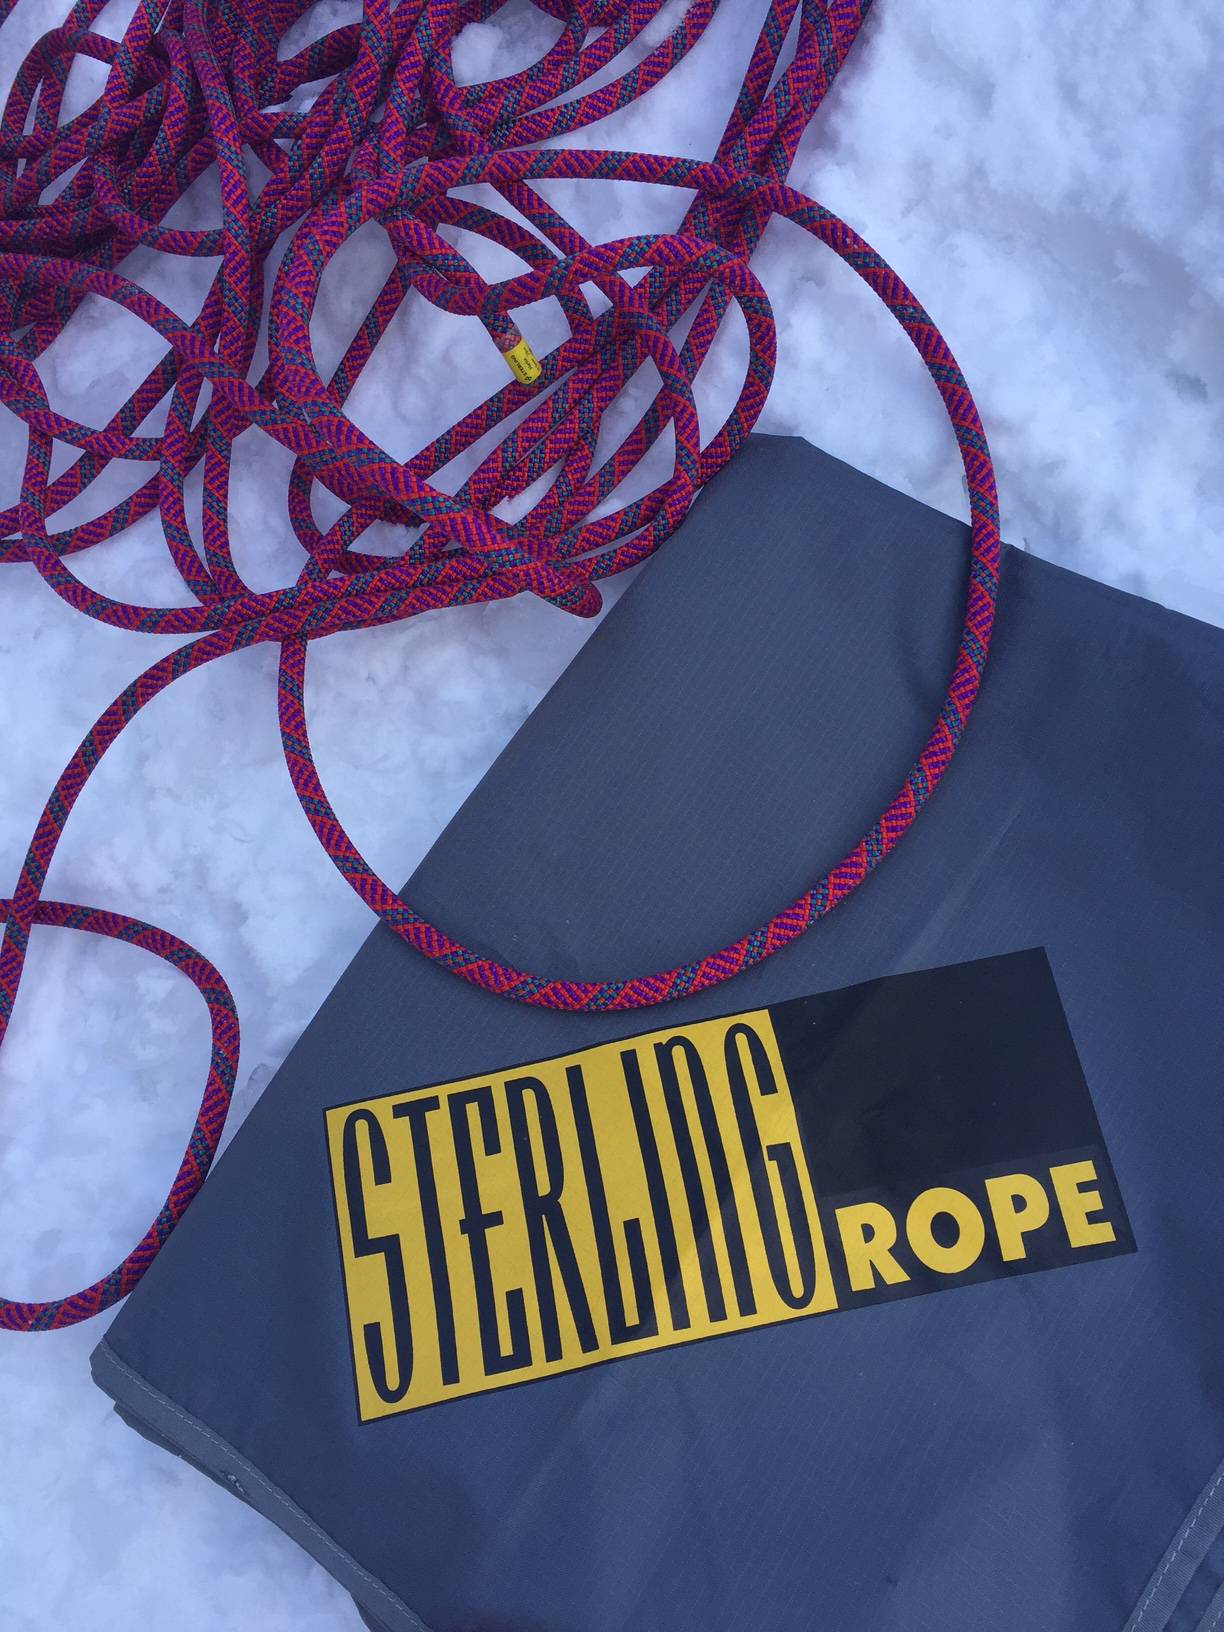 image of Sterling Rope Bag / Tarp